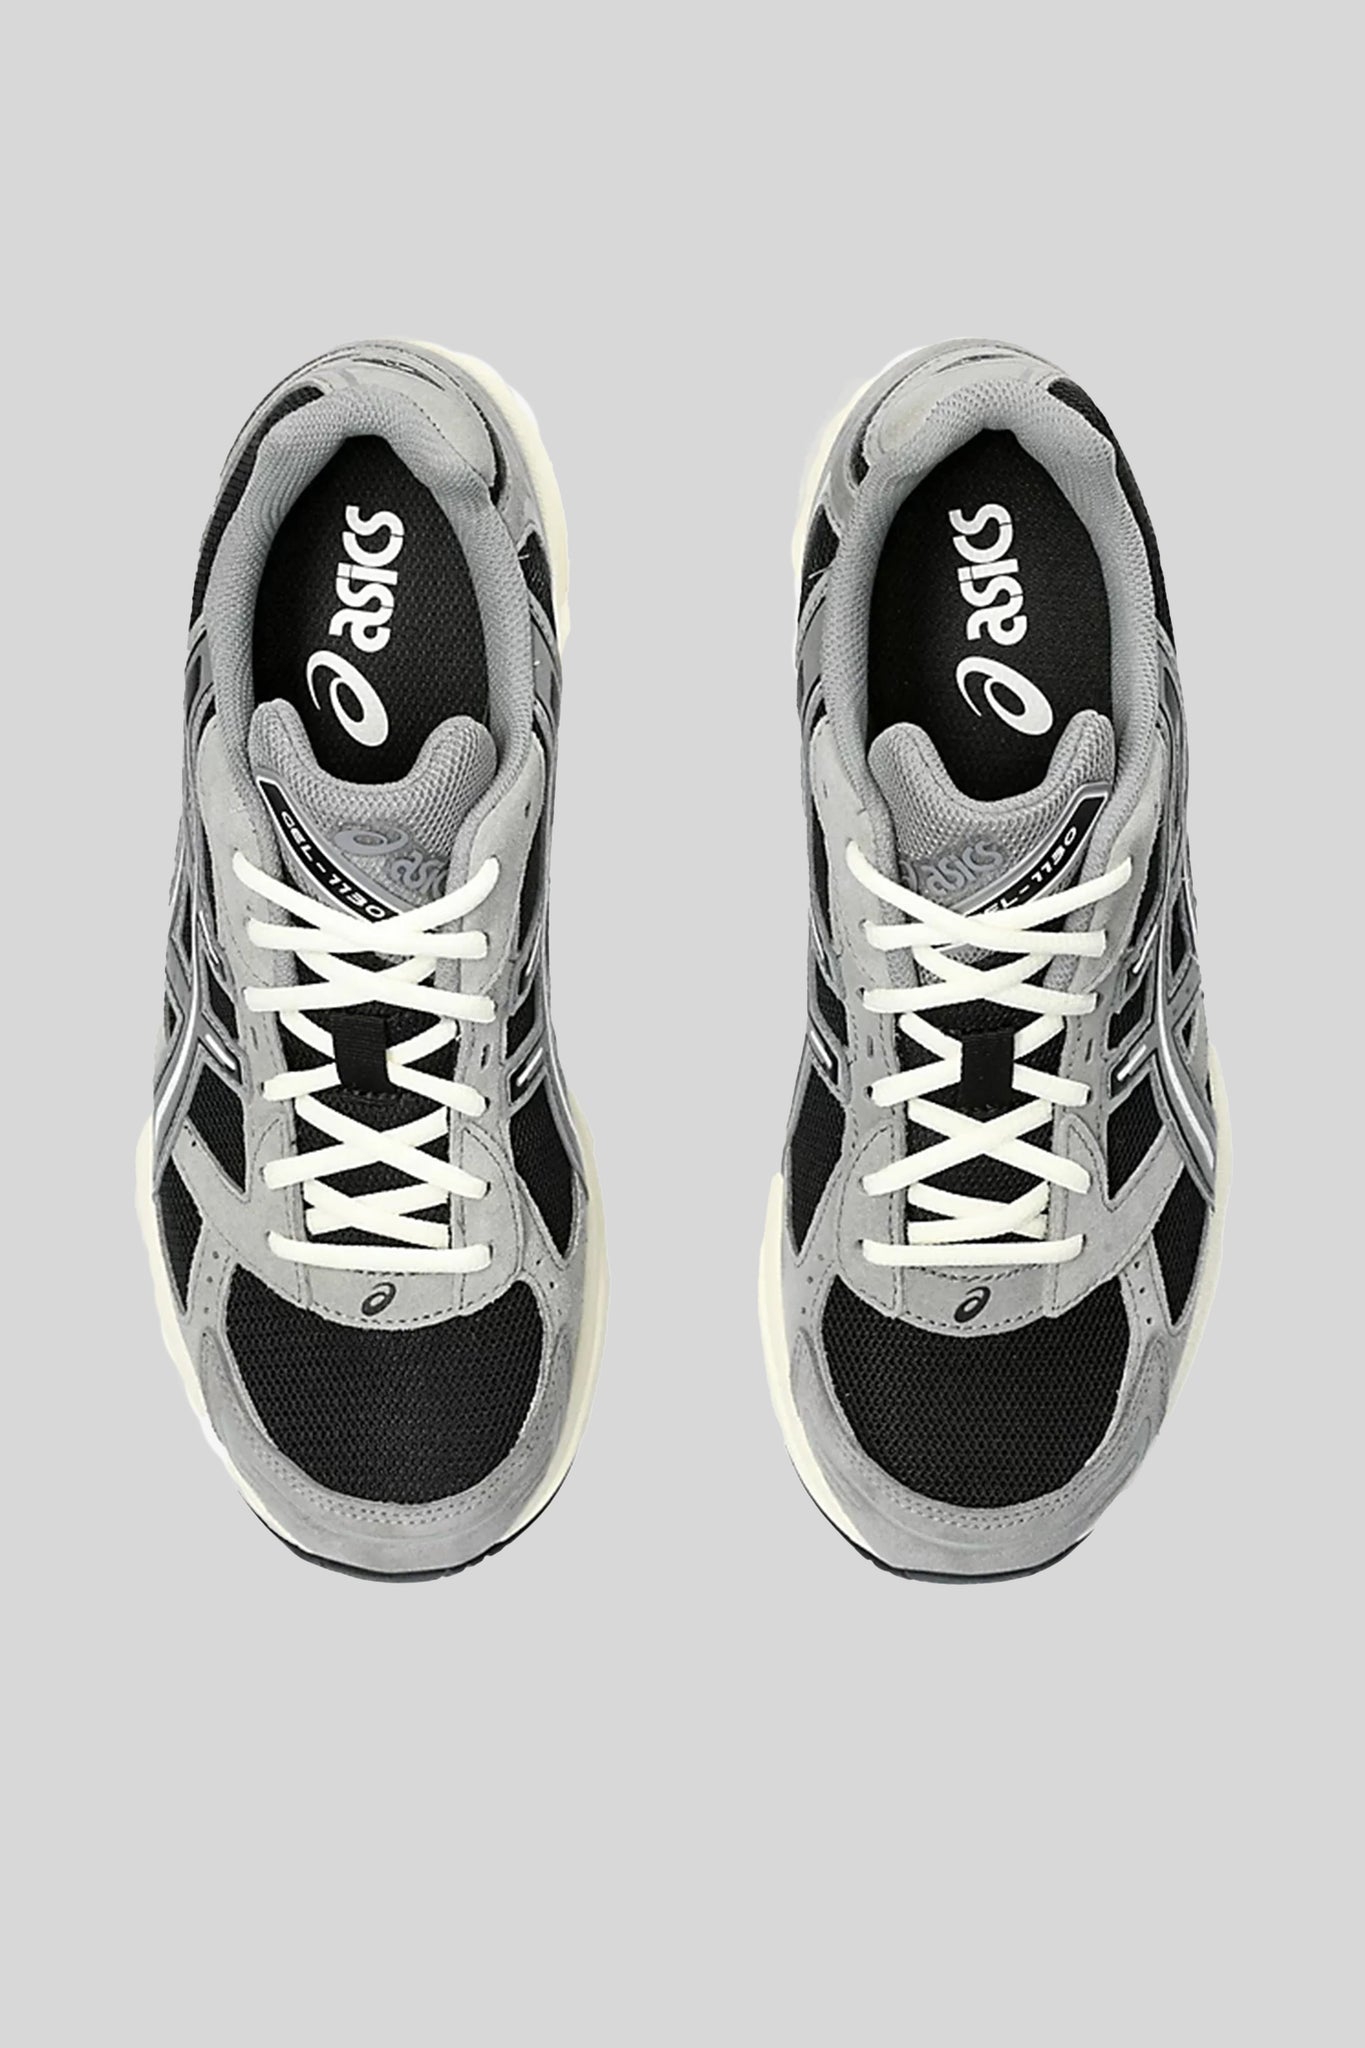 ASICS Men's Gel-1130 Sneaker in Black/Carbon